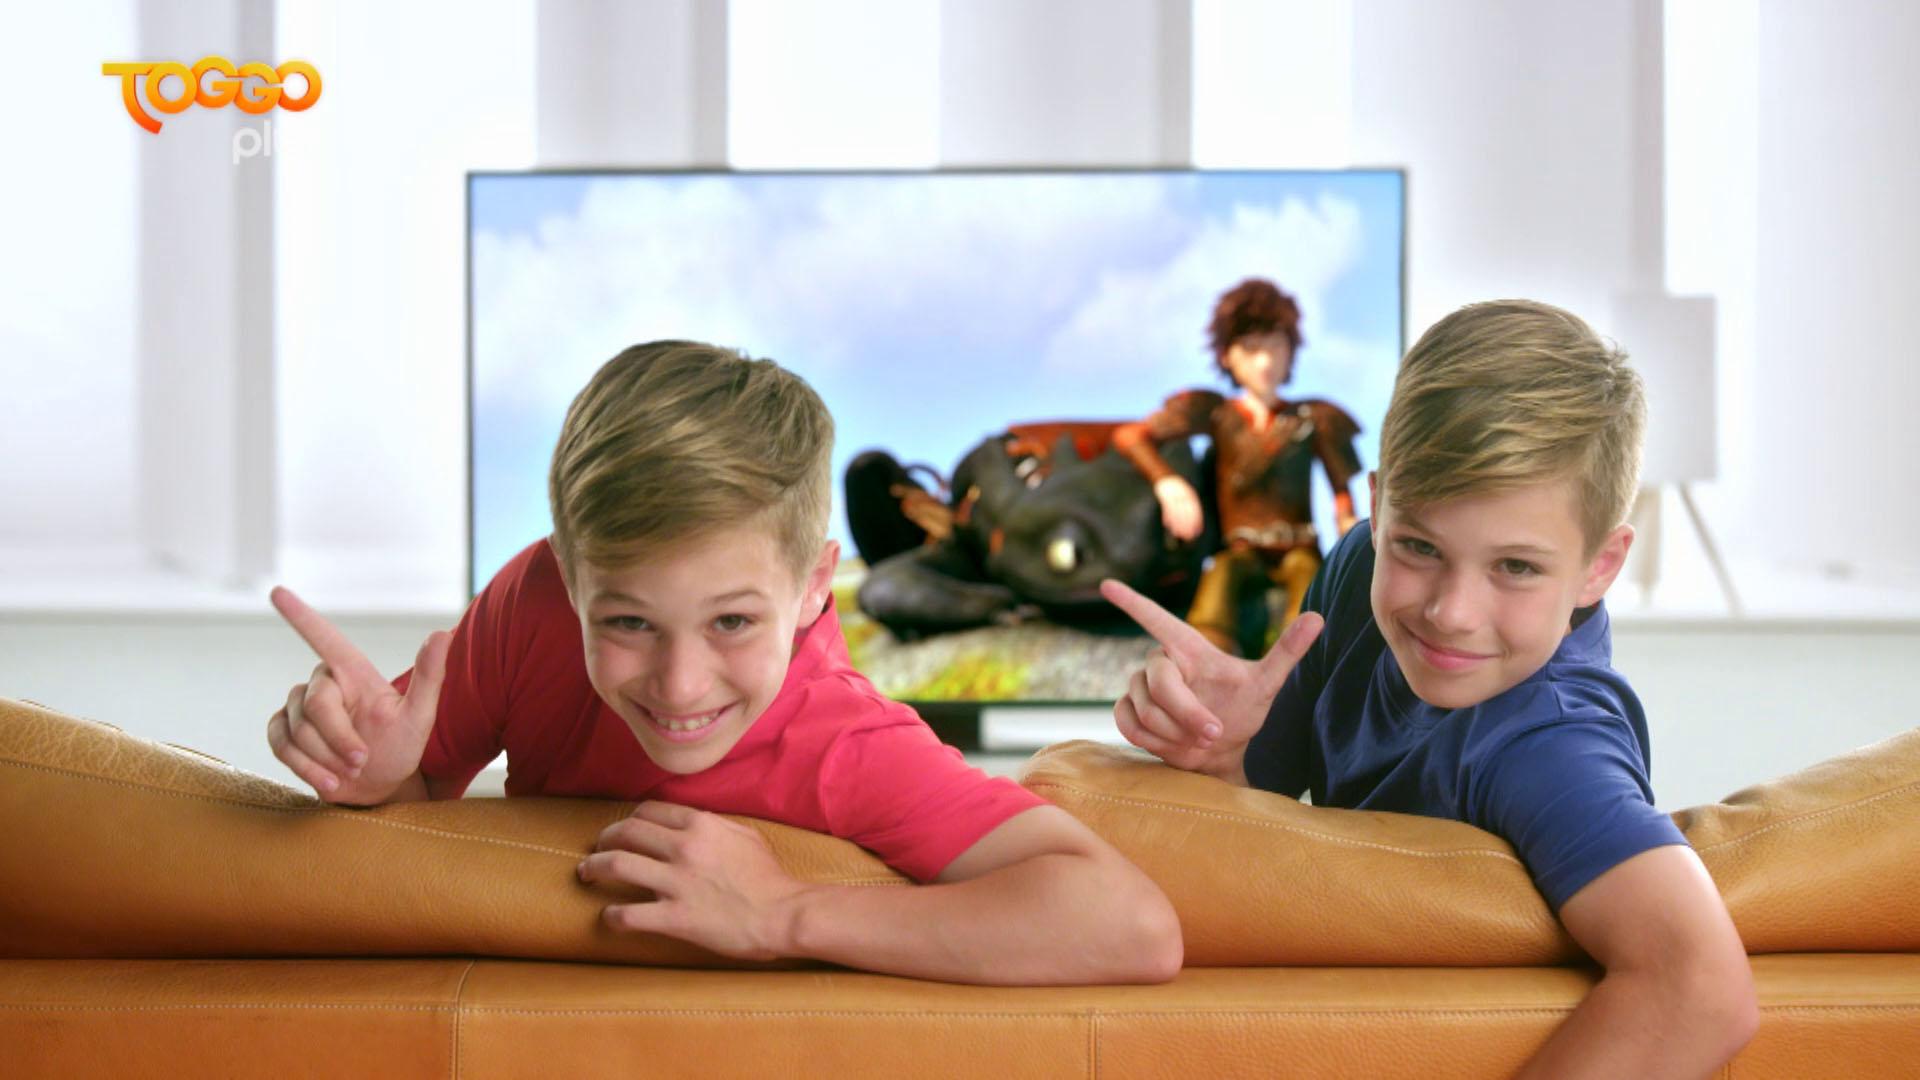 Toggo Plus TV Commercials | Kinder | visavis Filmproduktion